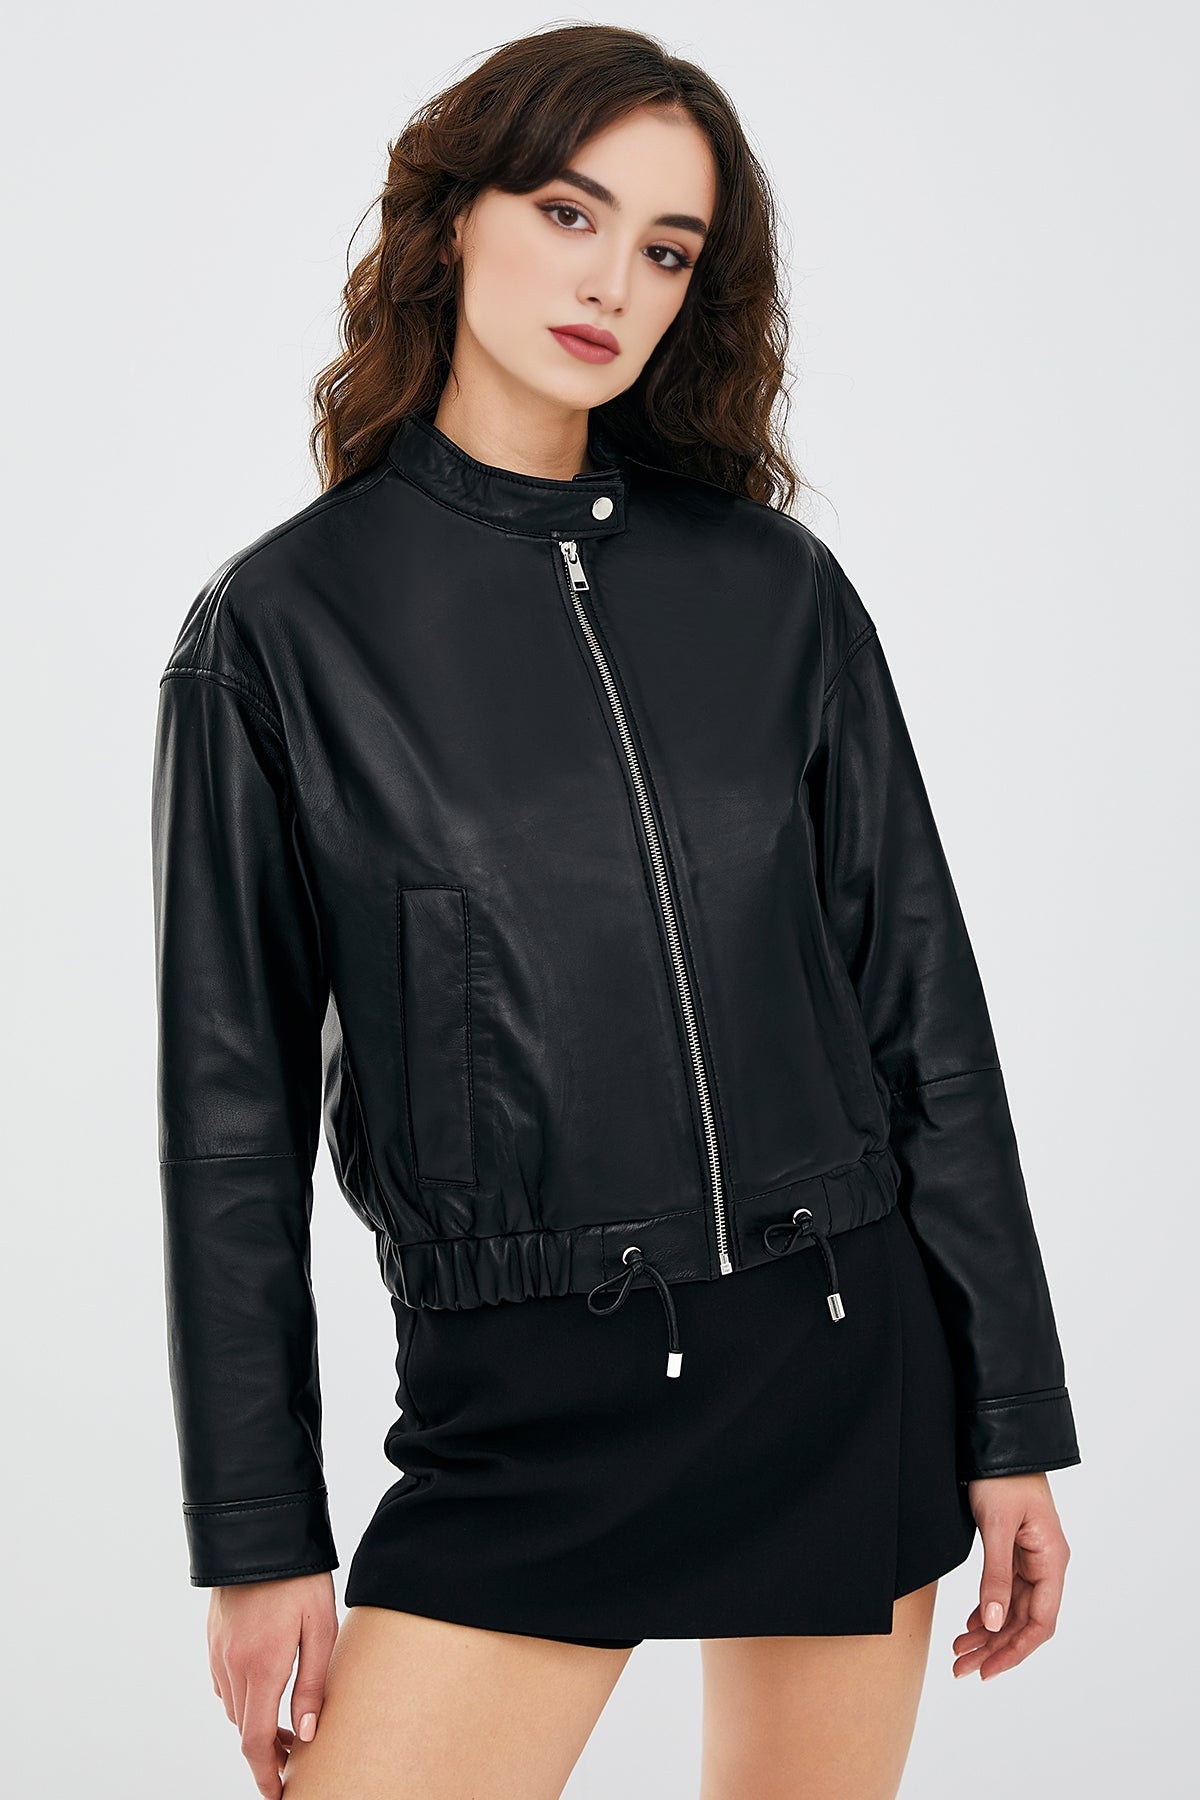 Flora Women's Black Oversize Leather Jacket